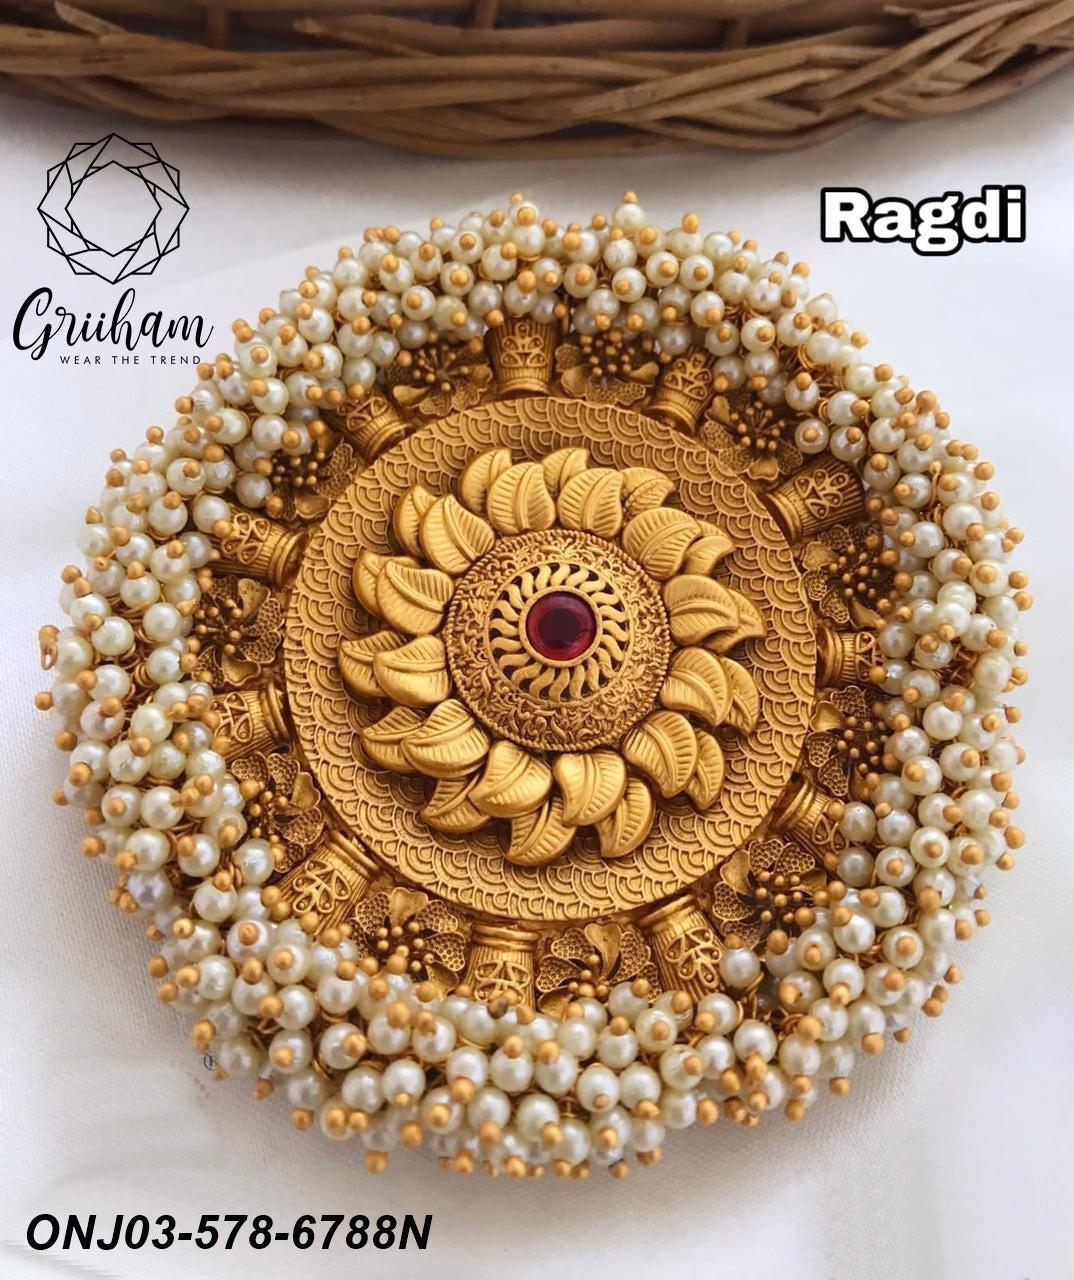 Premium Gold Finish guaranteed quality Bun Hair Clip /Hair Pin (Rakhdi) with pearls AD Stones 6788N